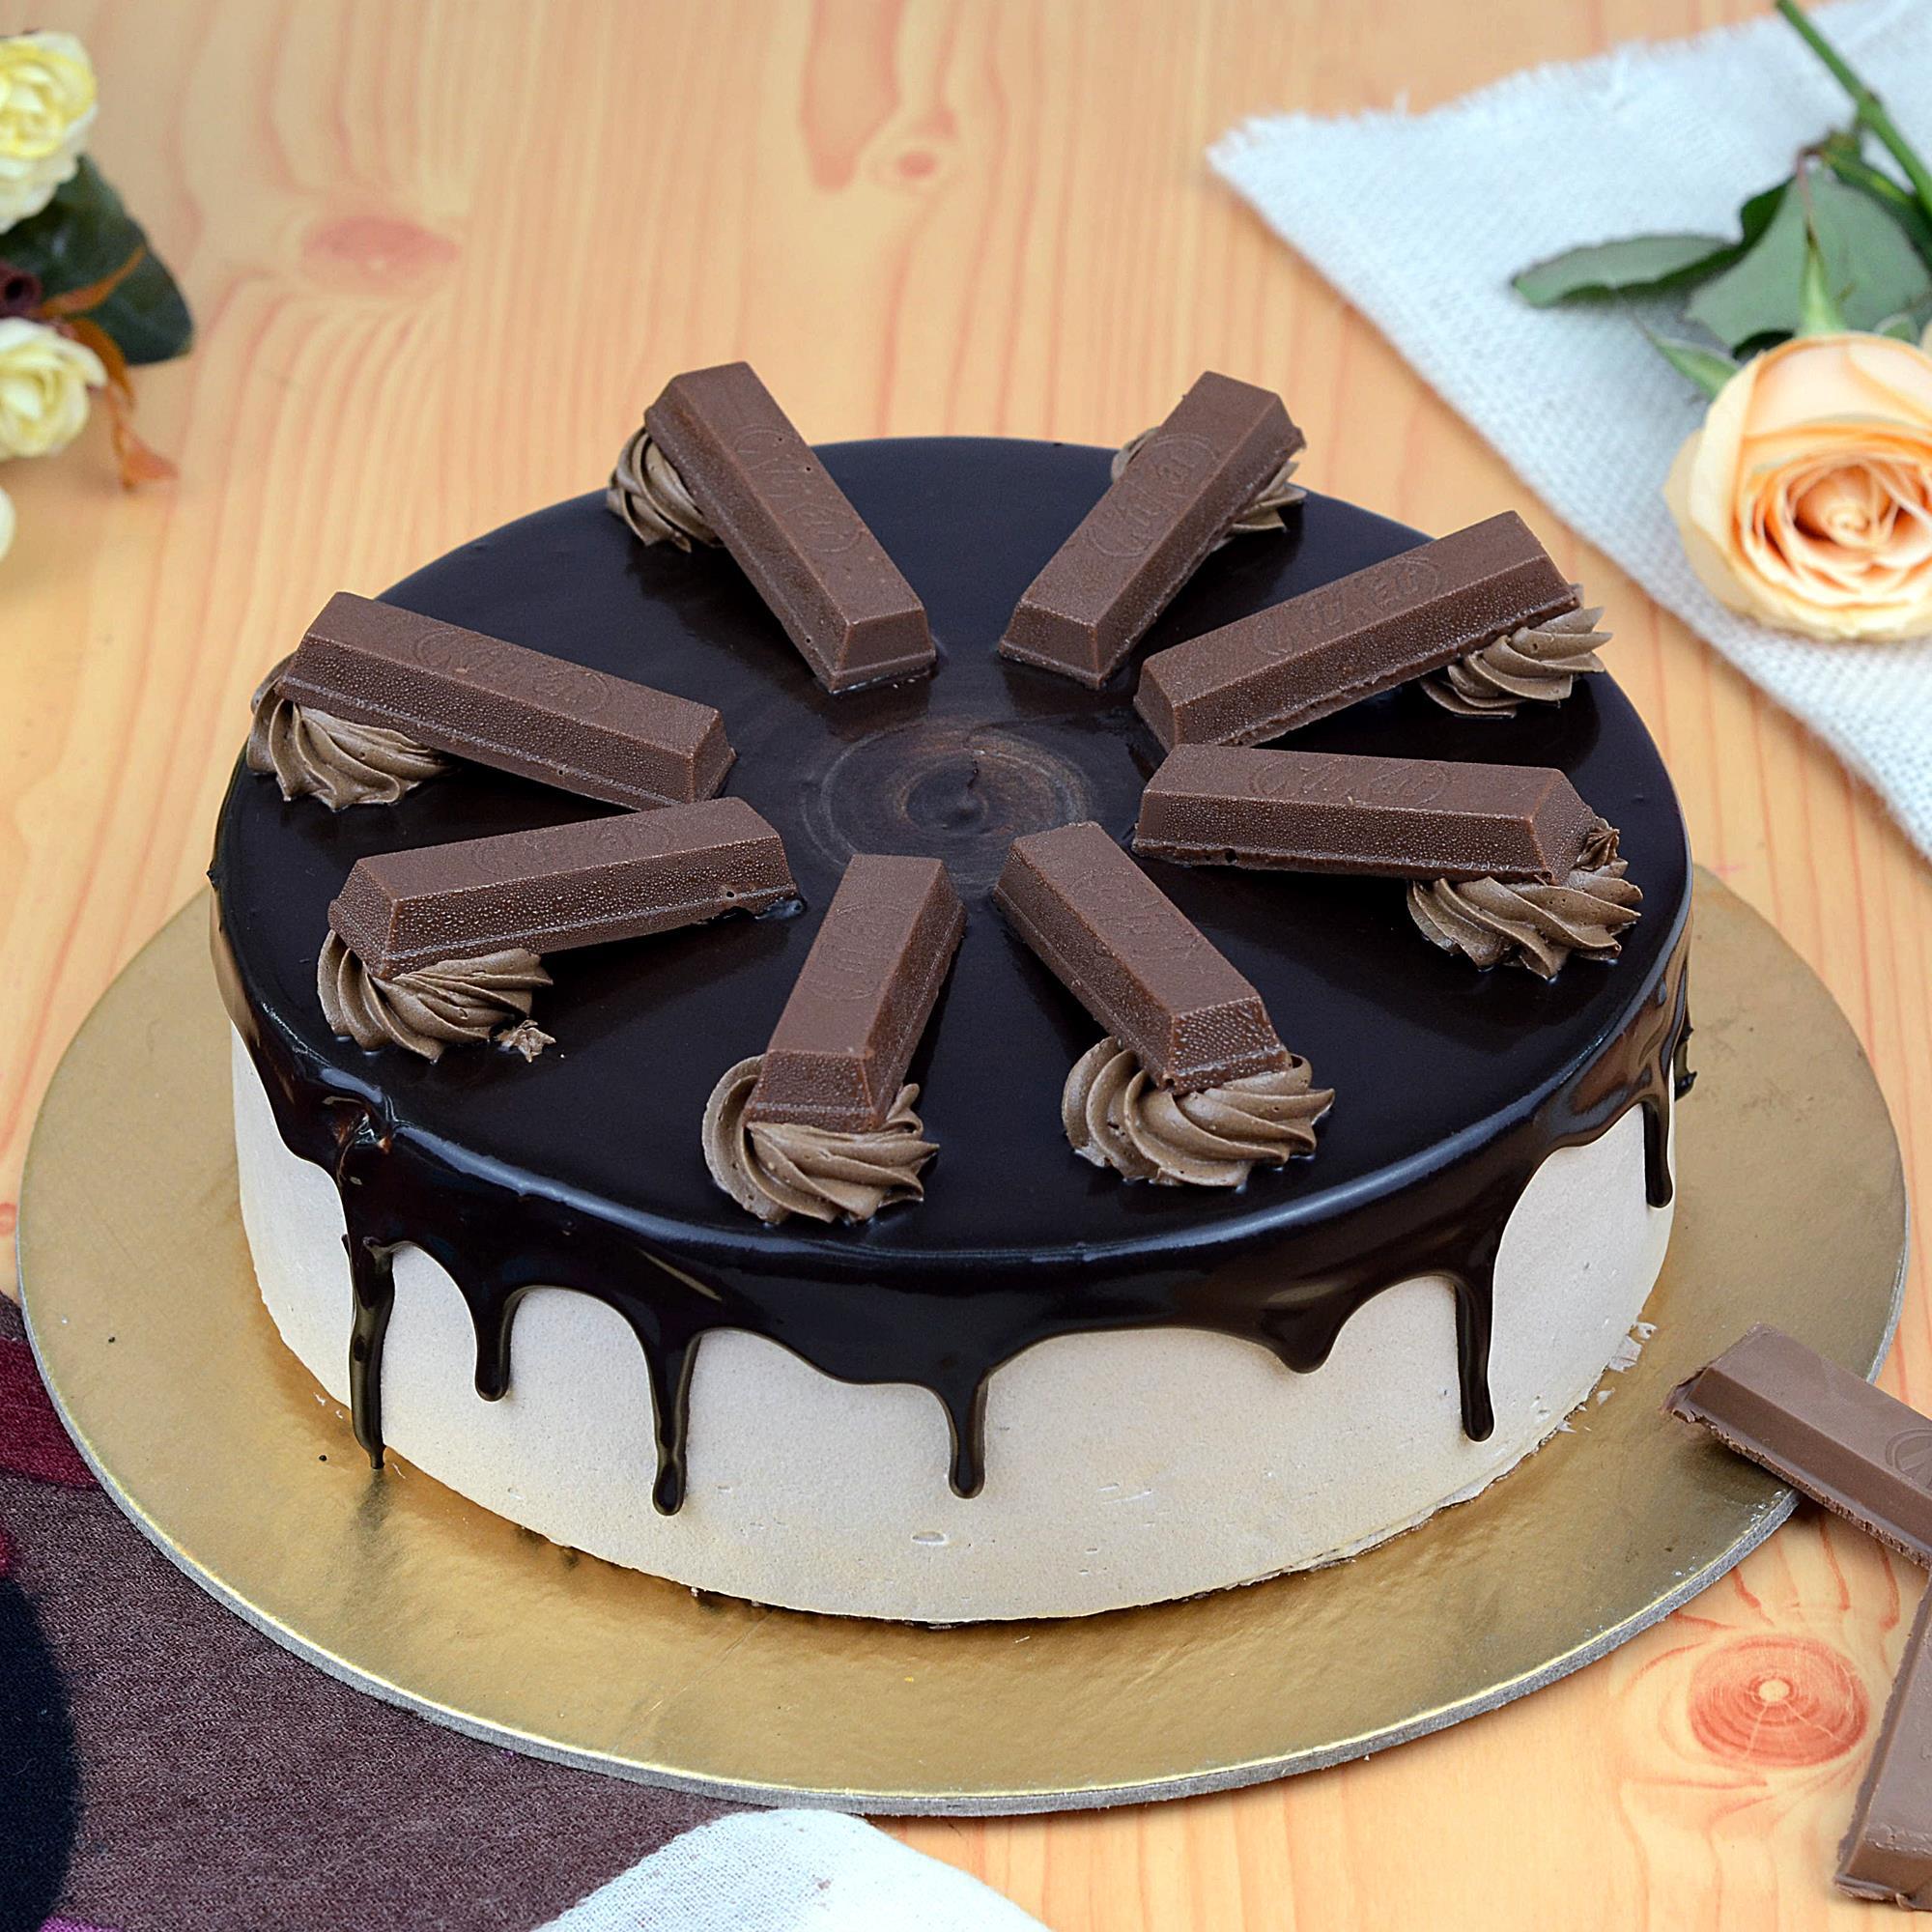 KitKat Chocolate Cream Cake